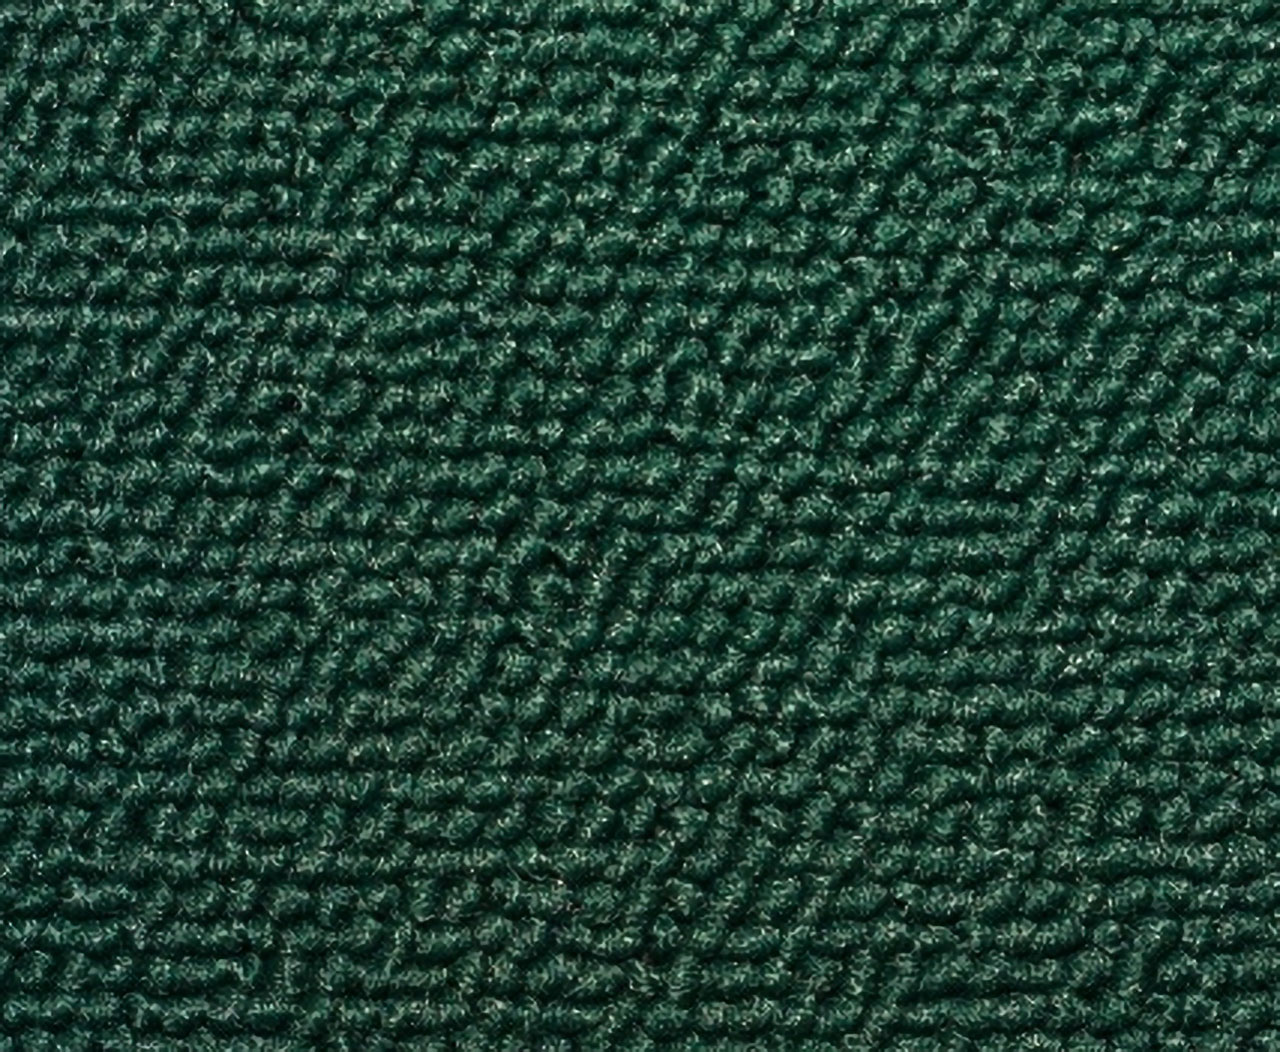 Holden Standard EJ Standard Wagon B06 Triton Green Carpet (Image 1 of 1)